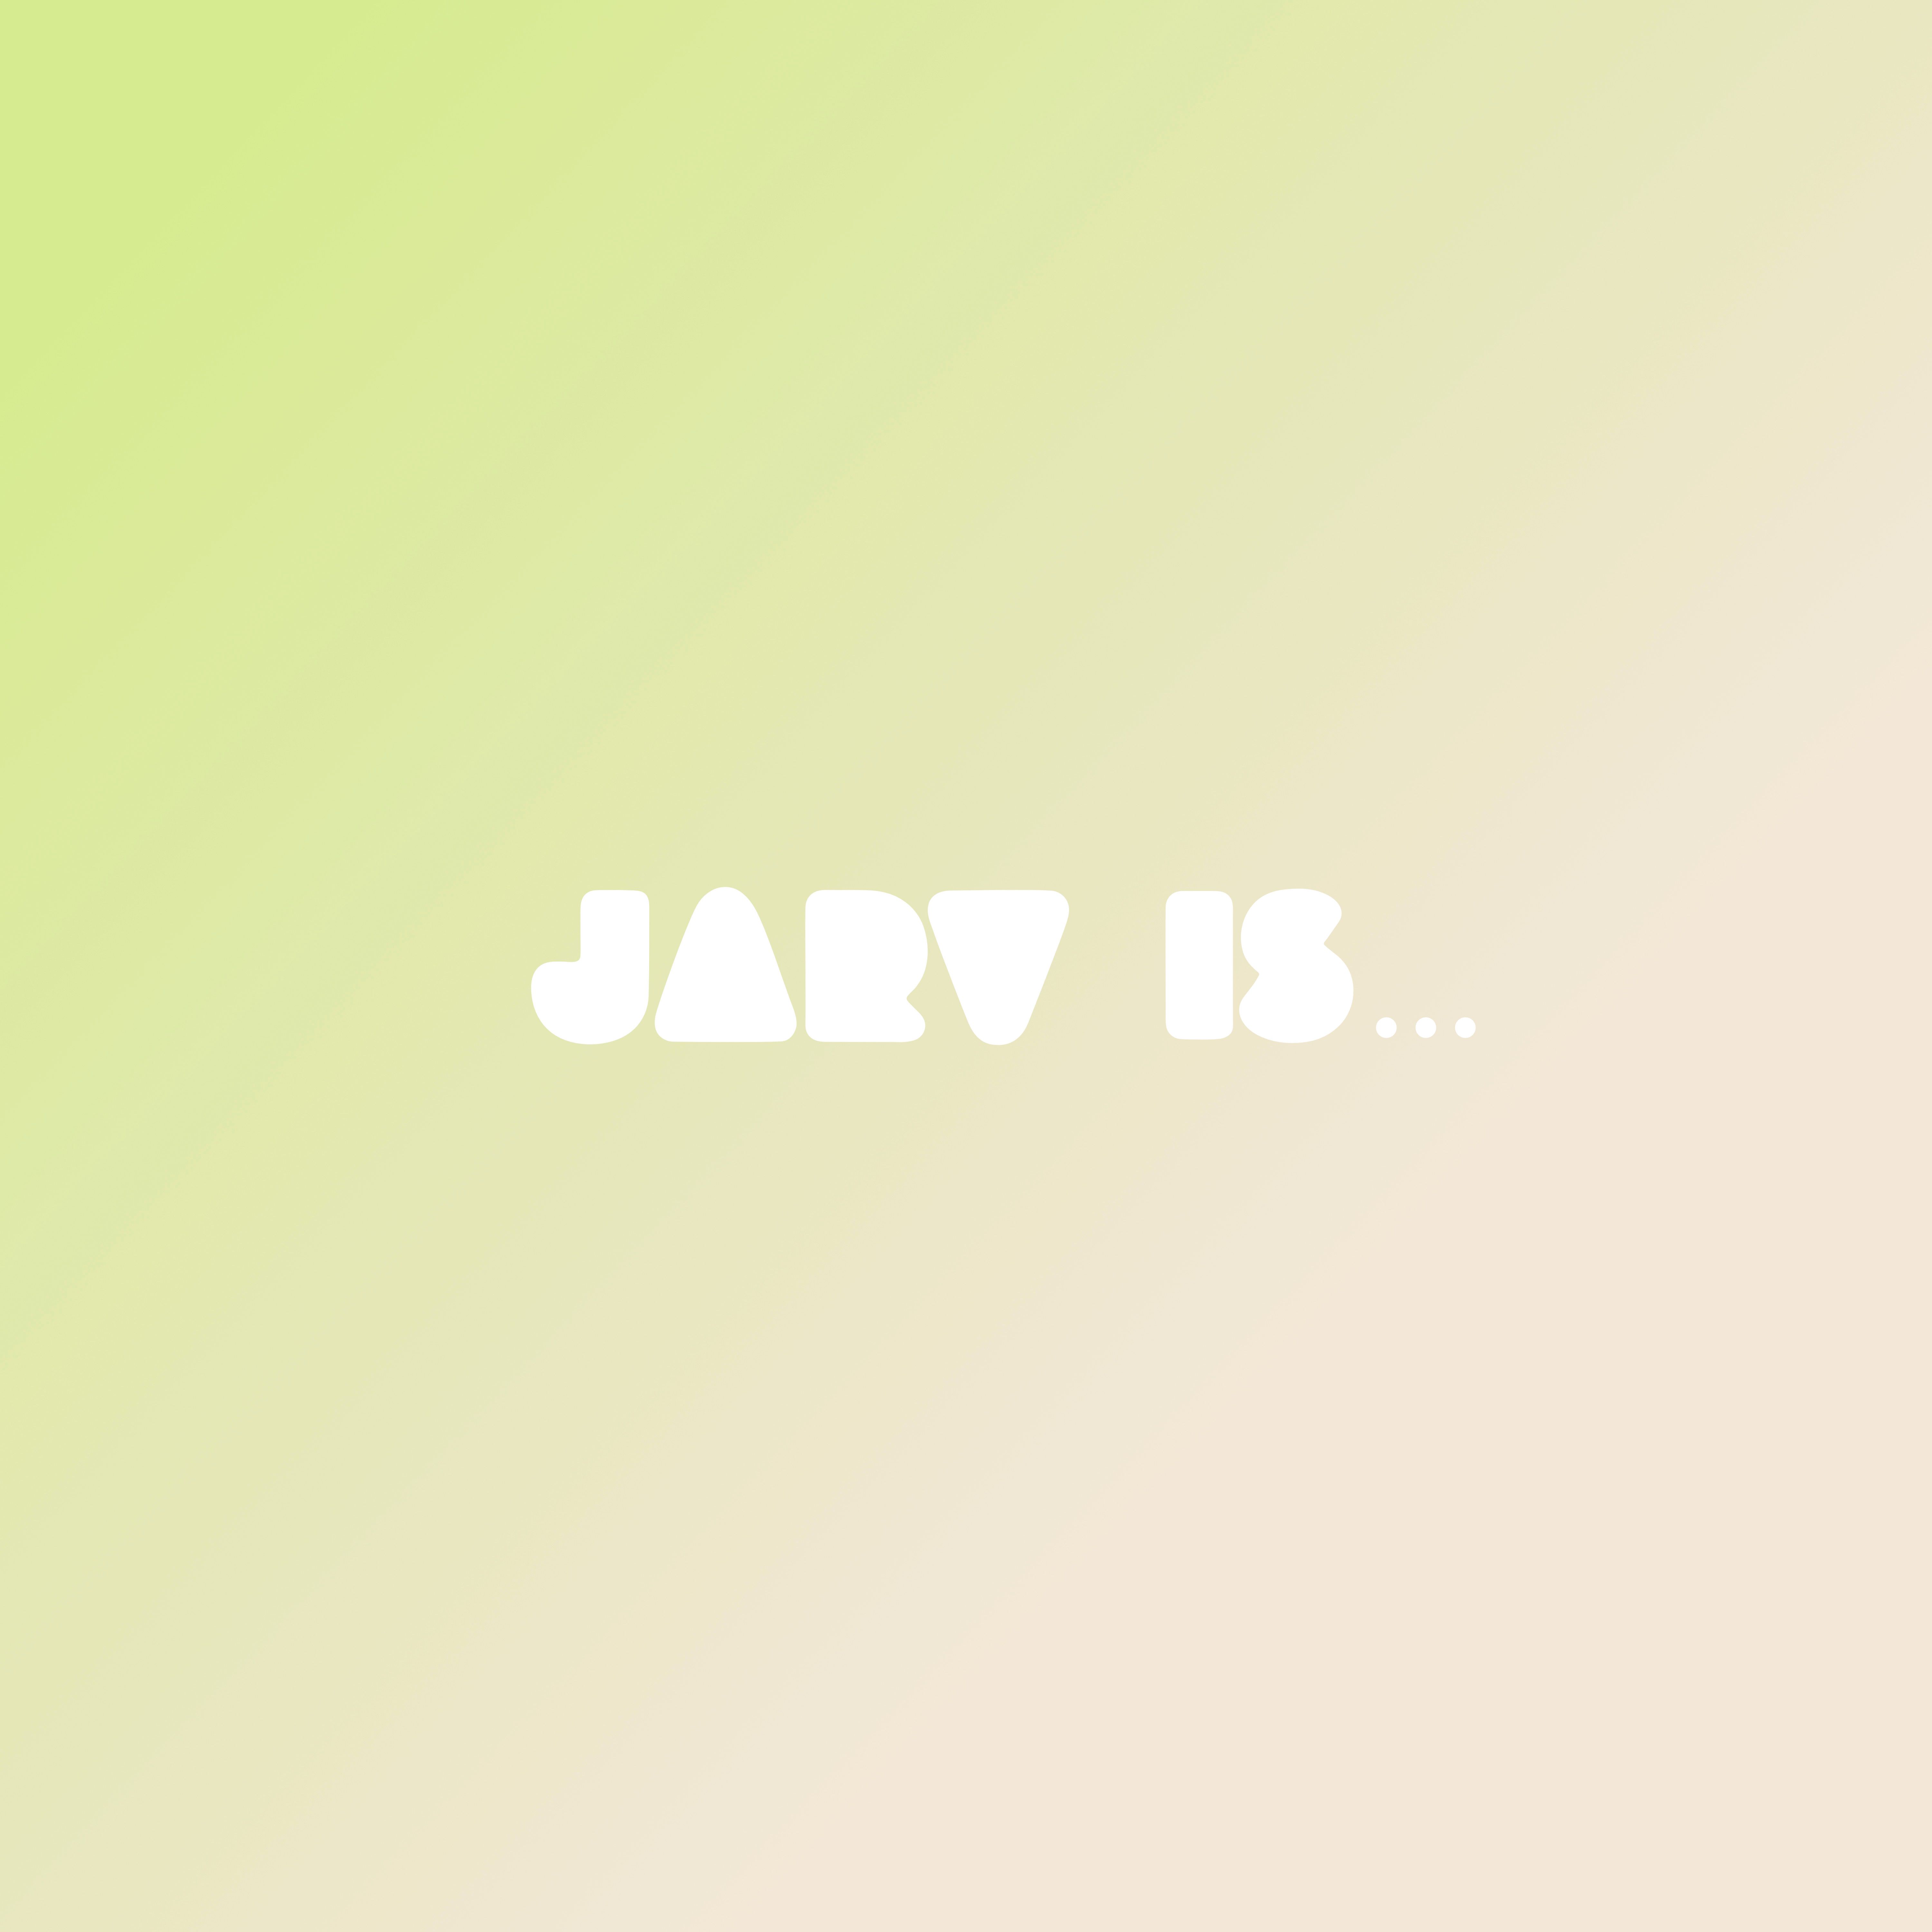 JARVIS BEYOND THE PALE ALBUM COVER Jarv Is… (Jarvis Cocker) Sort son premier album Beyond the Pale: Stream